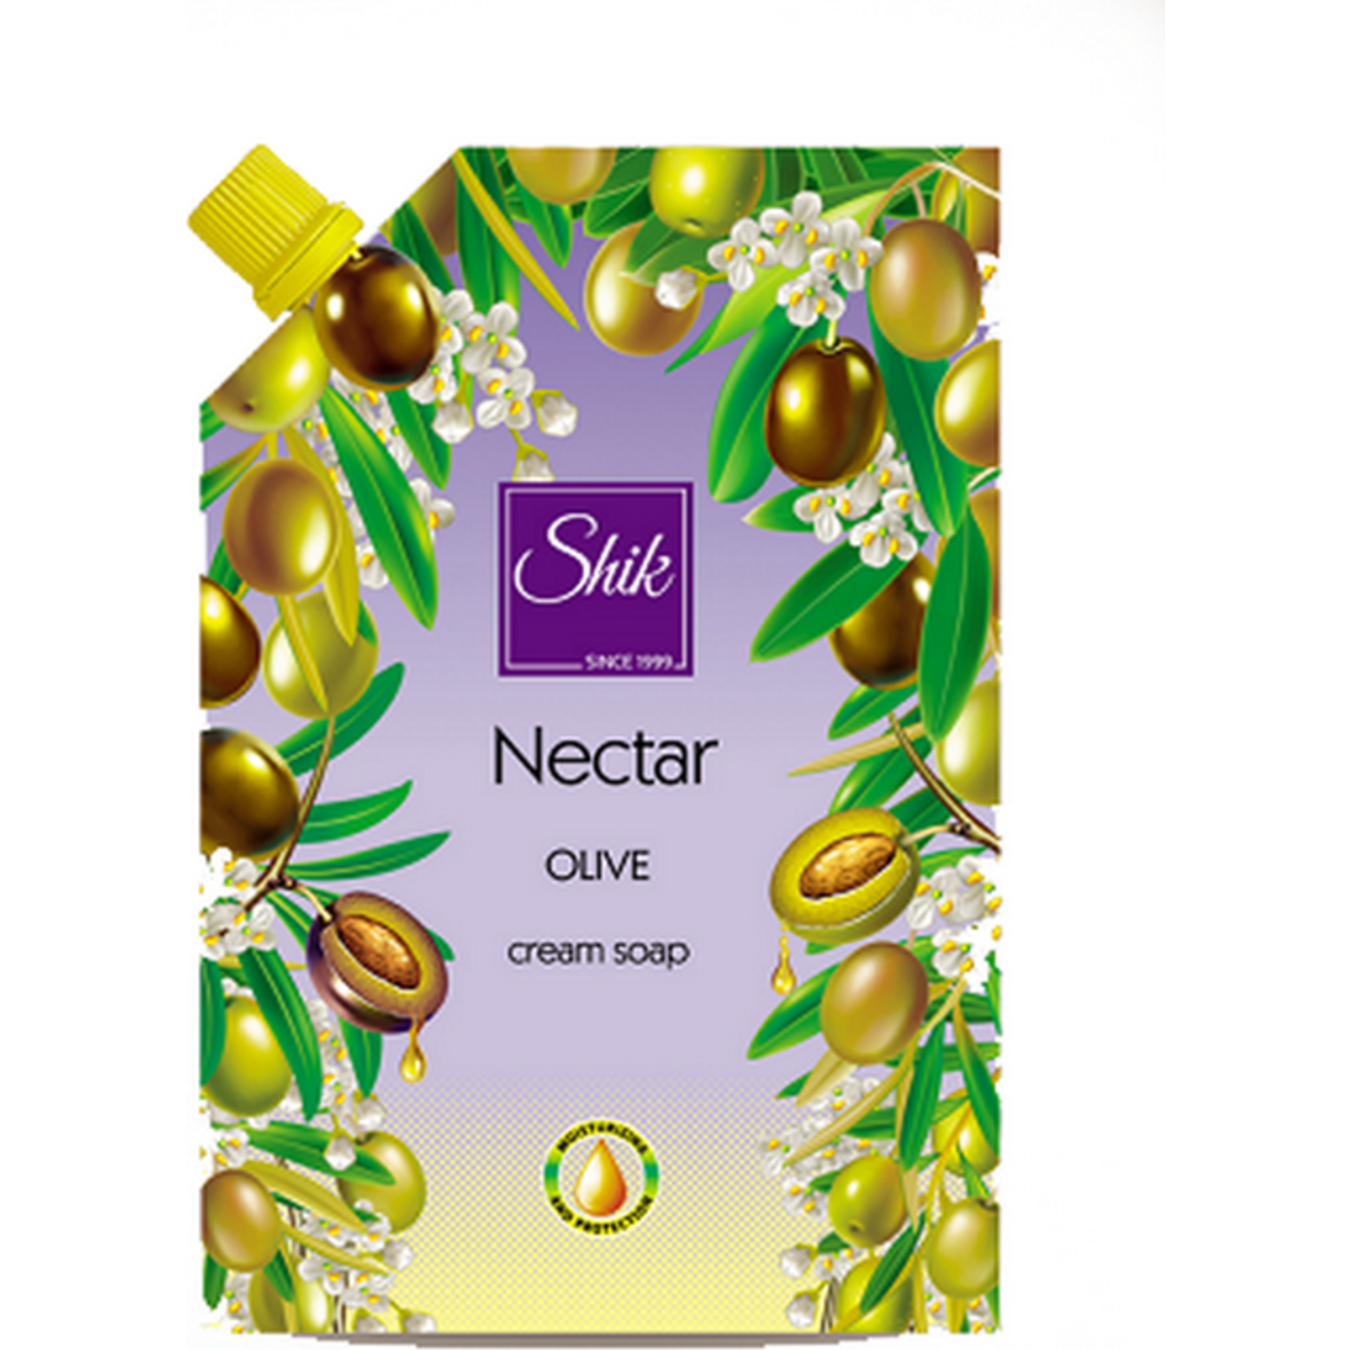 Shik Nectar Olive Liquid Cream-Soap 460g